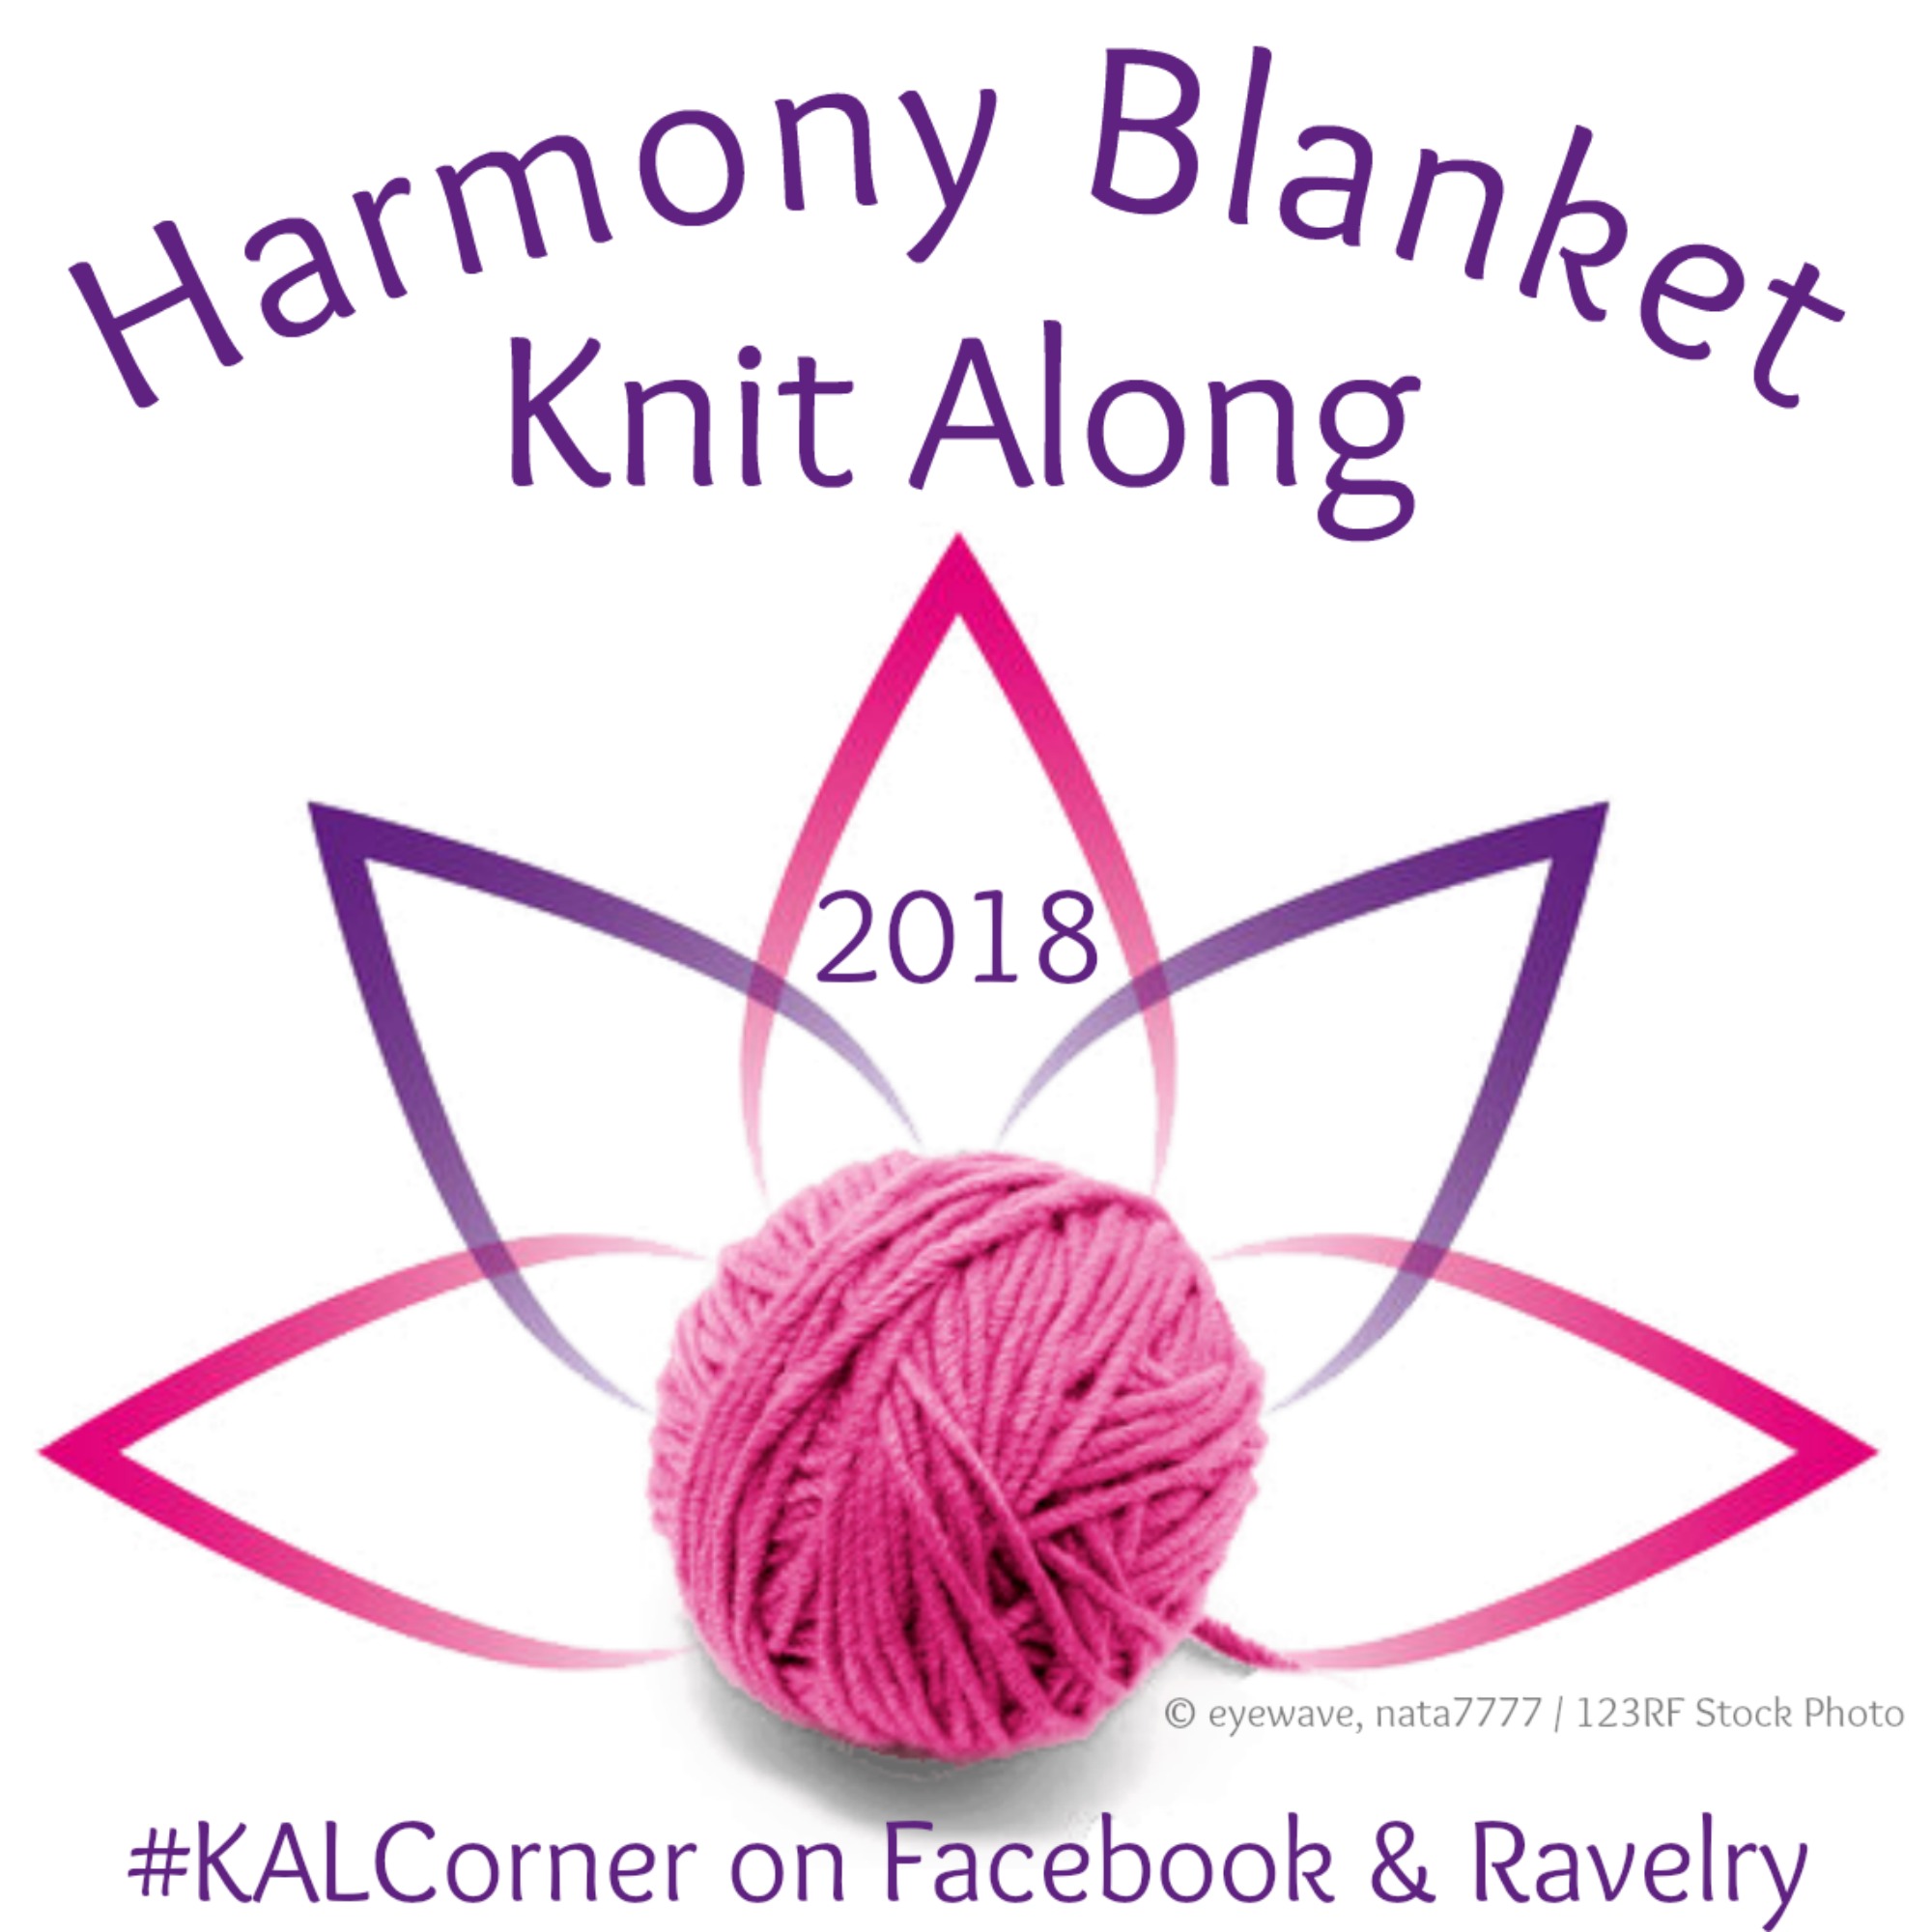 Harmony Blanket KAL - #KALCorner on Facebook